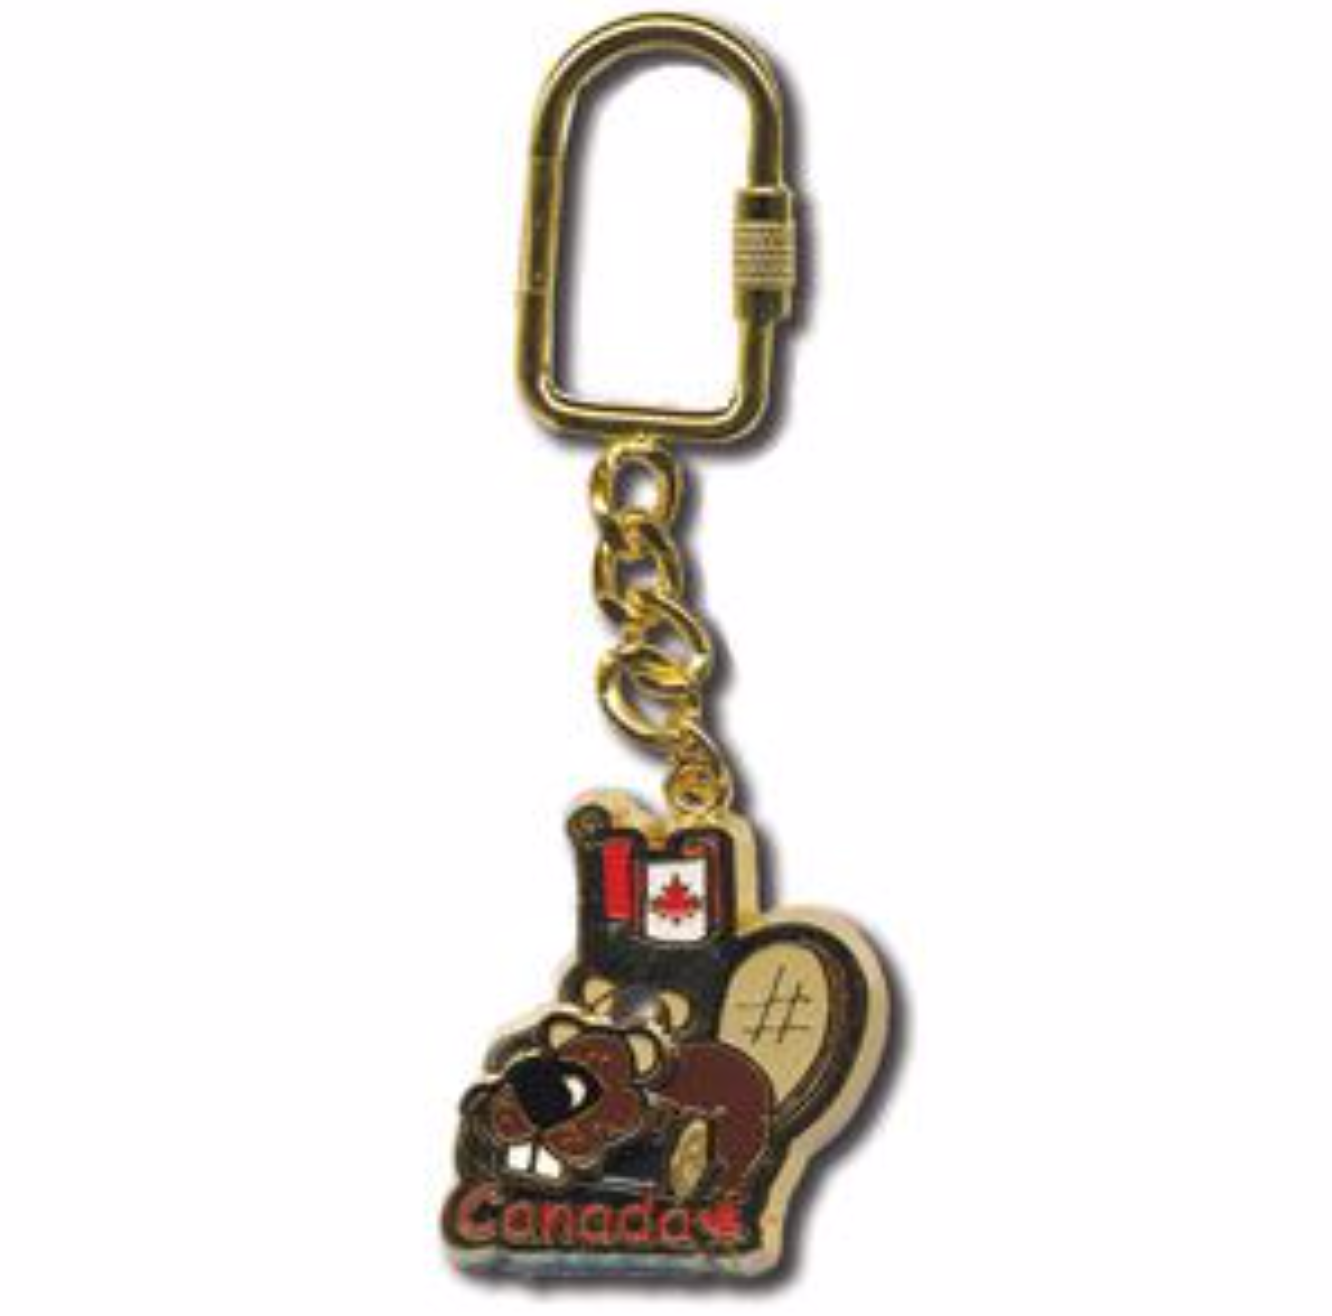 Enamel key tag featuring moving wildlife icon, Canada-themed souvenir